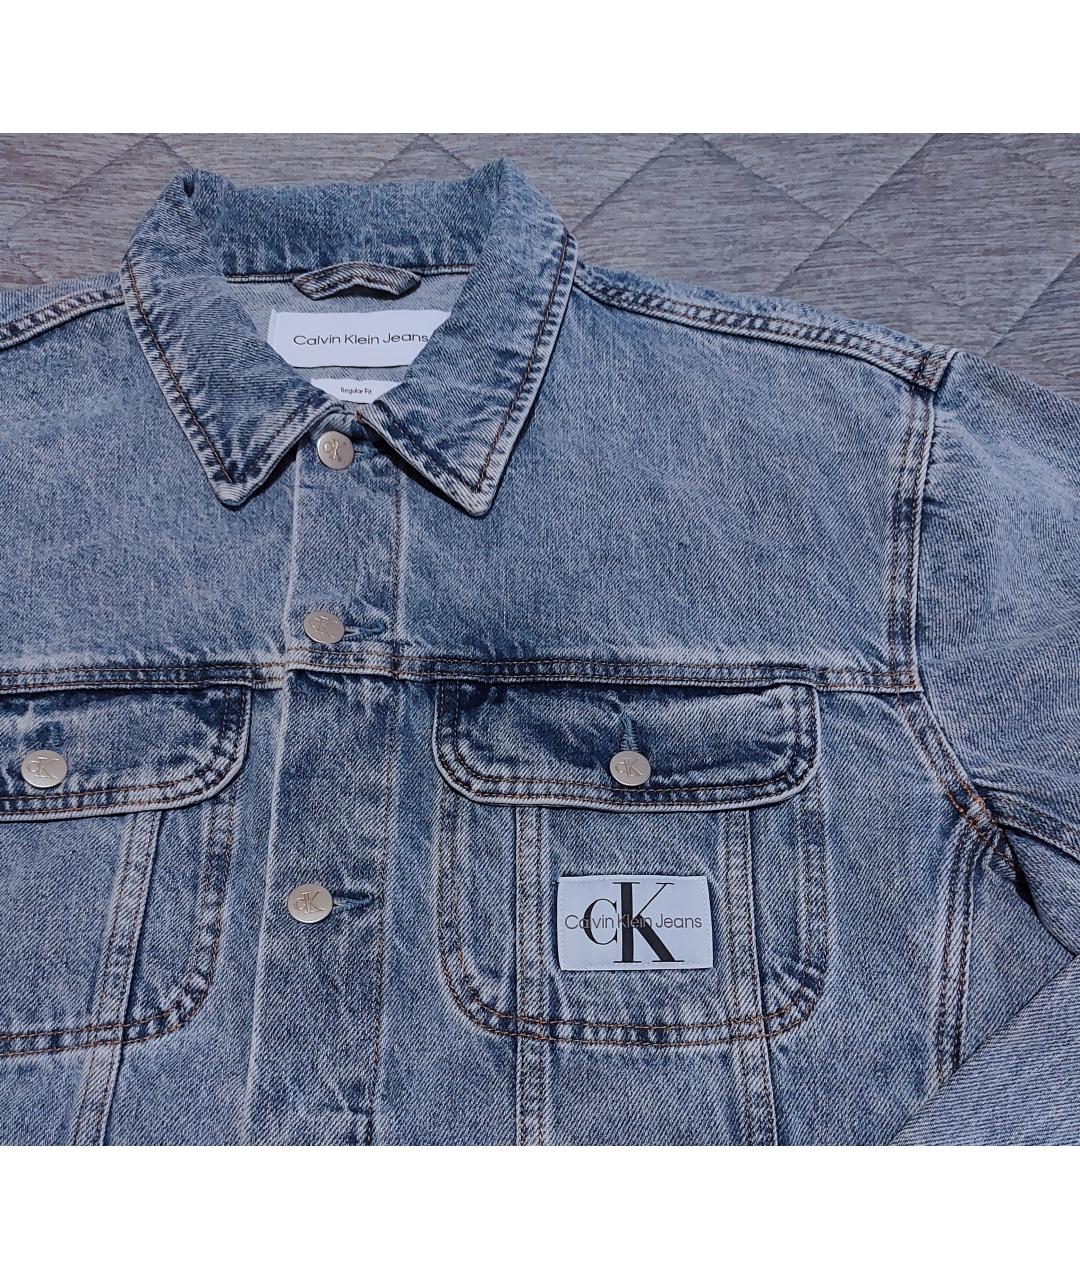 For Calvin Klein Jeans 🤍 @calvinklein #calvinkleinjeans #calvinklein  #calvinkleinunderwear #ck #moda #fashion #calvinkleinthailand